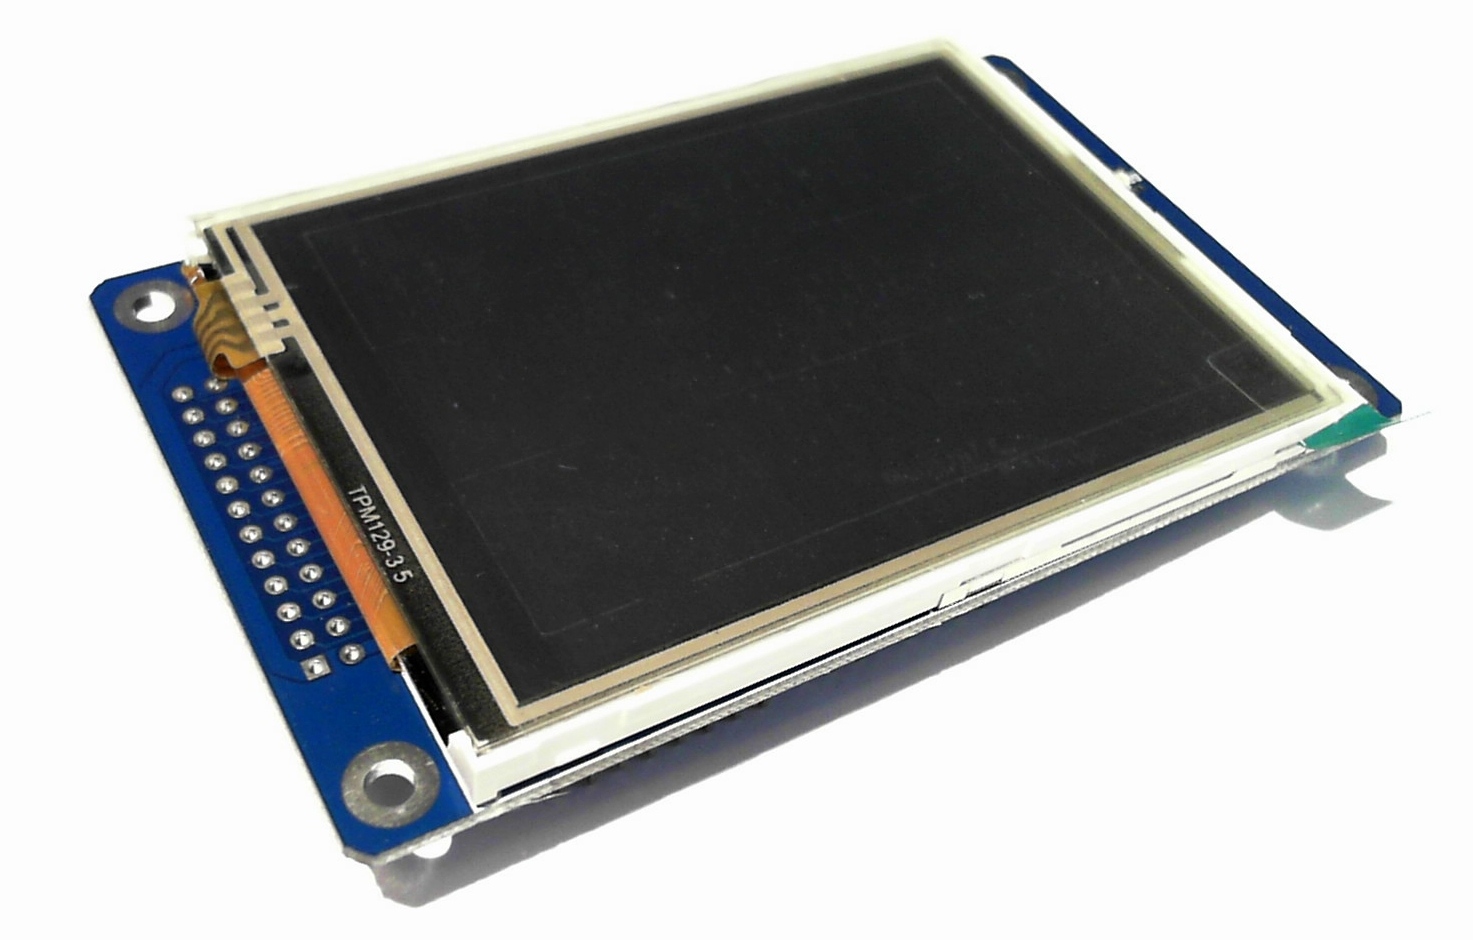 картинка LCD shield  3.2" TFT для Arduino UNO, MEGA | ВсеКомпоненты.ру